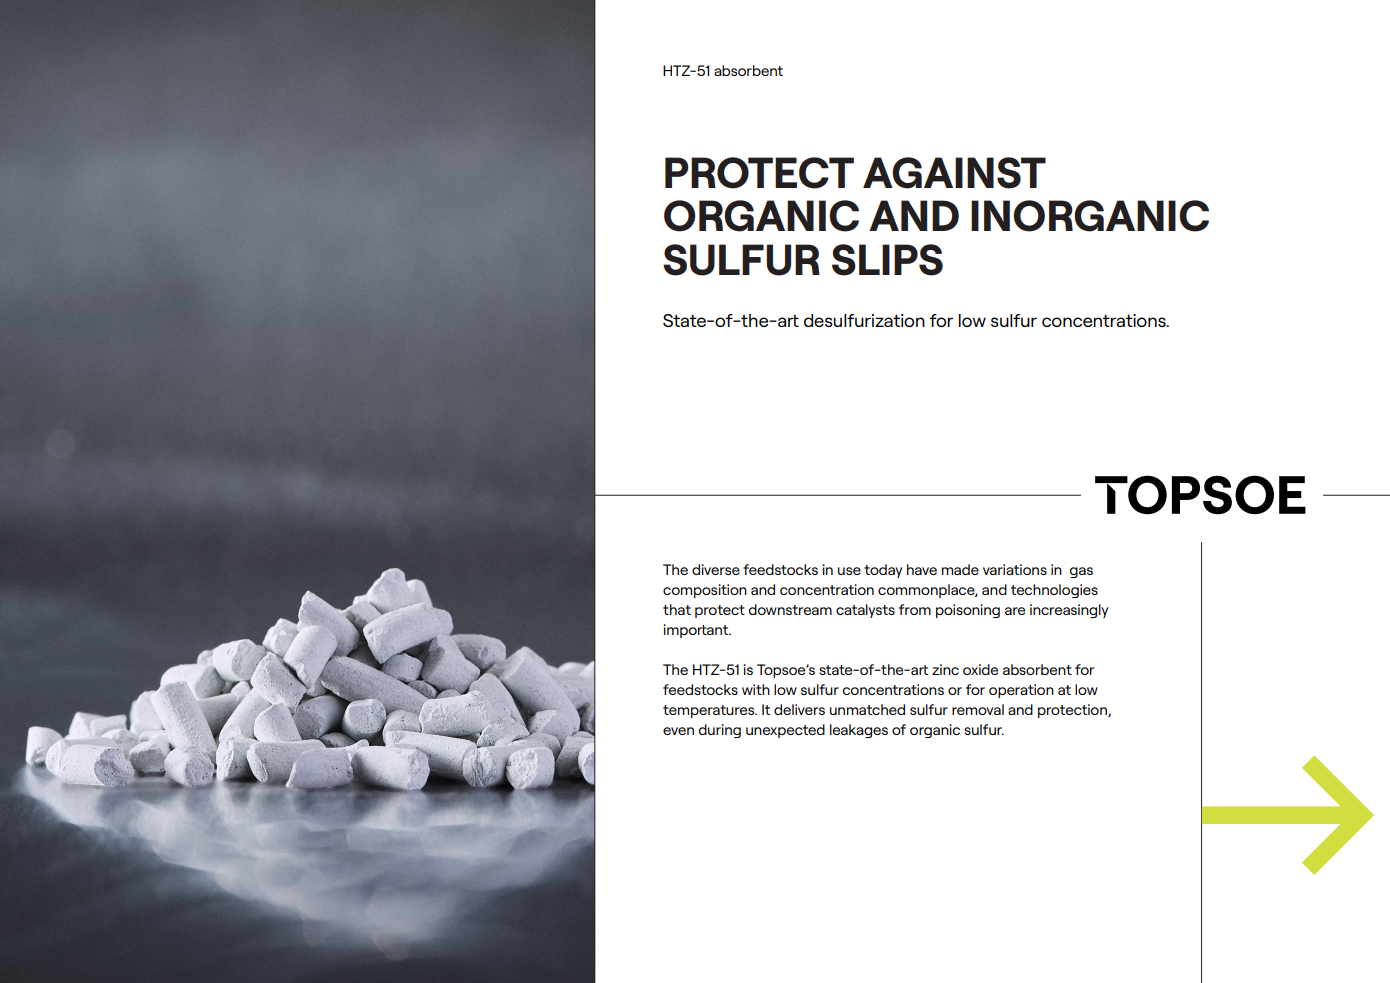 Protect against organic and inorganic sulfur slips